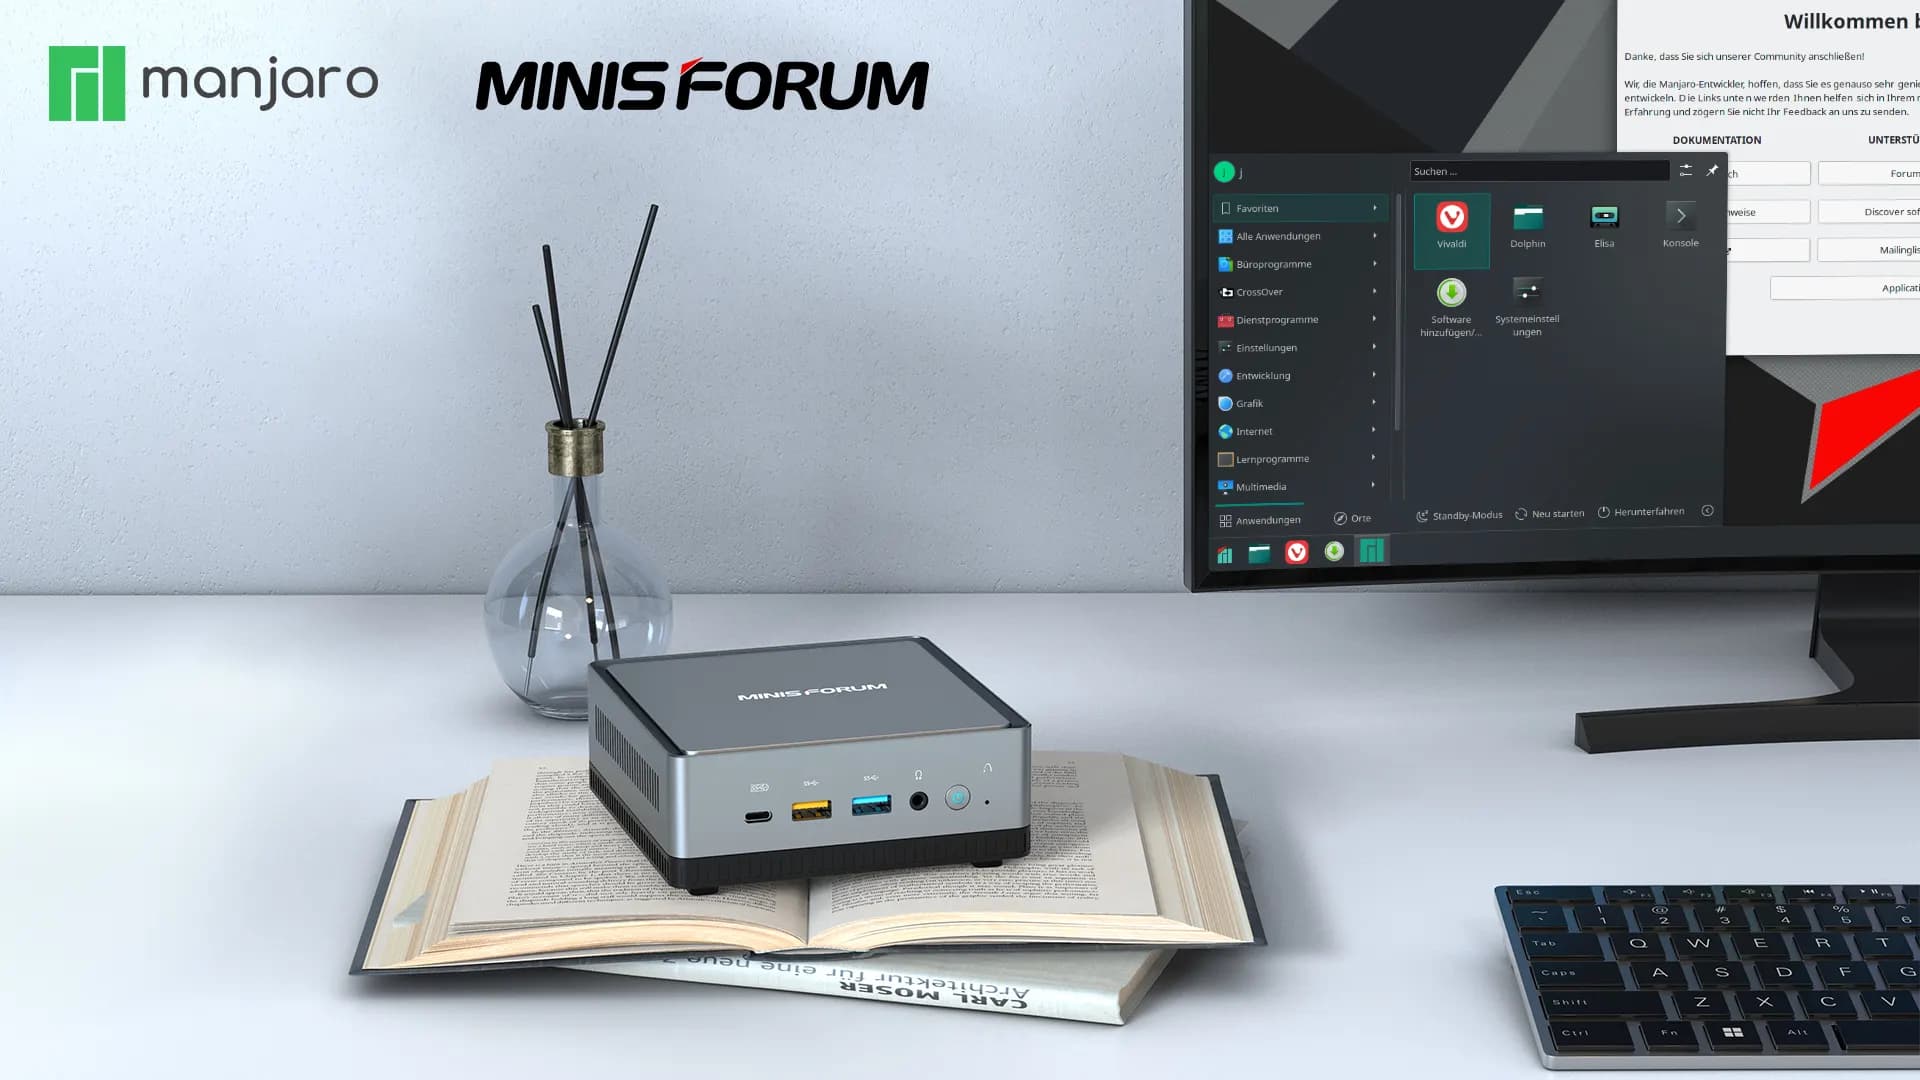 Mini PC EliteMini UM700 with Manjaro pre-installed now available - Notices  - Manjaro Linux Forum